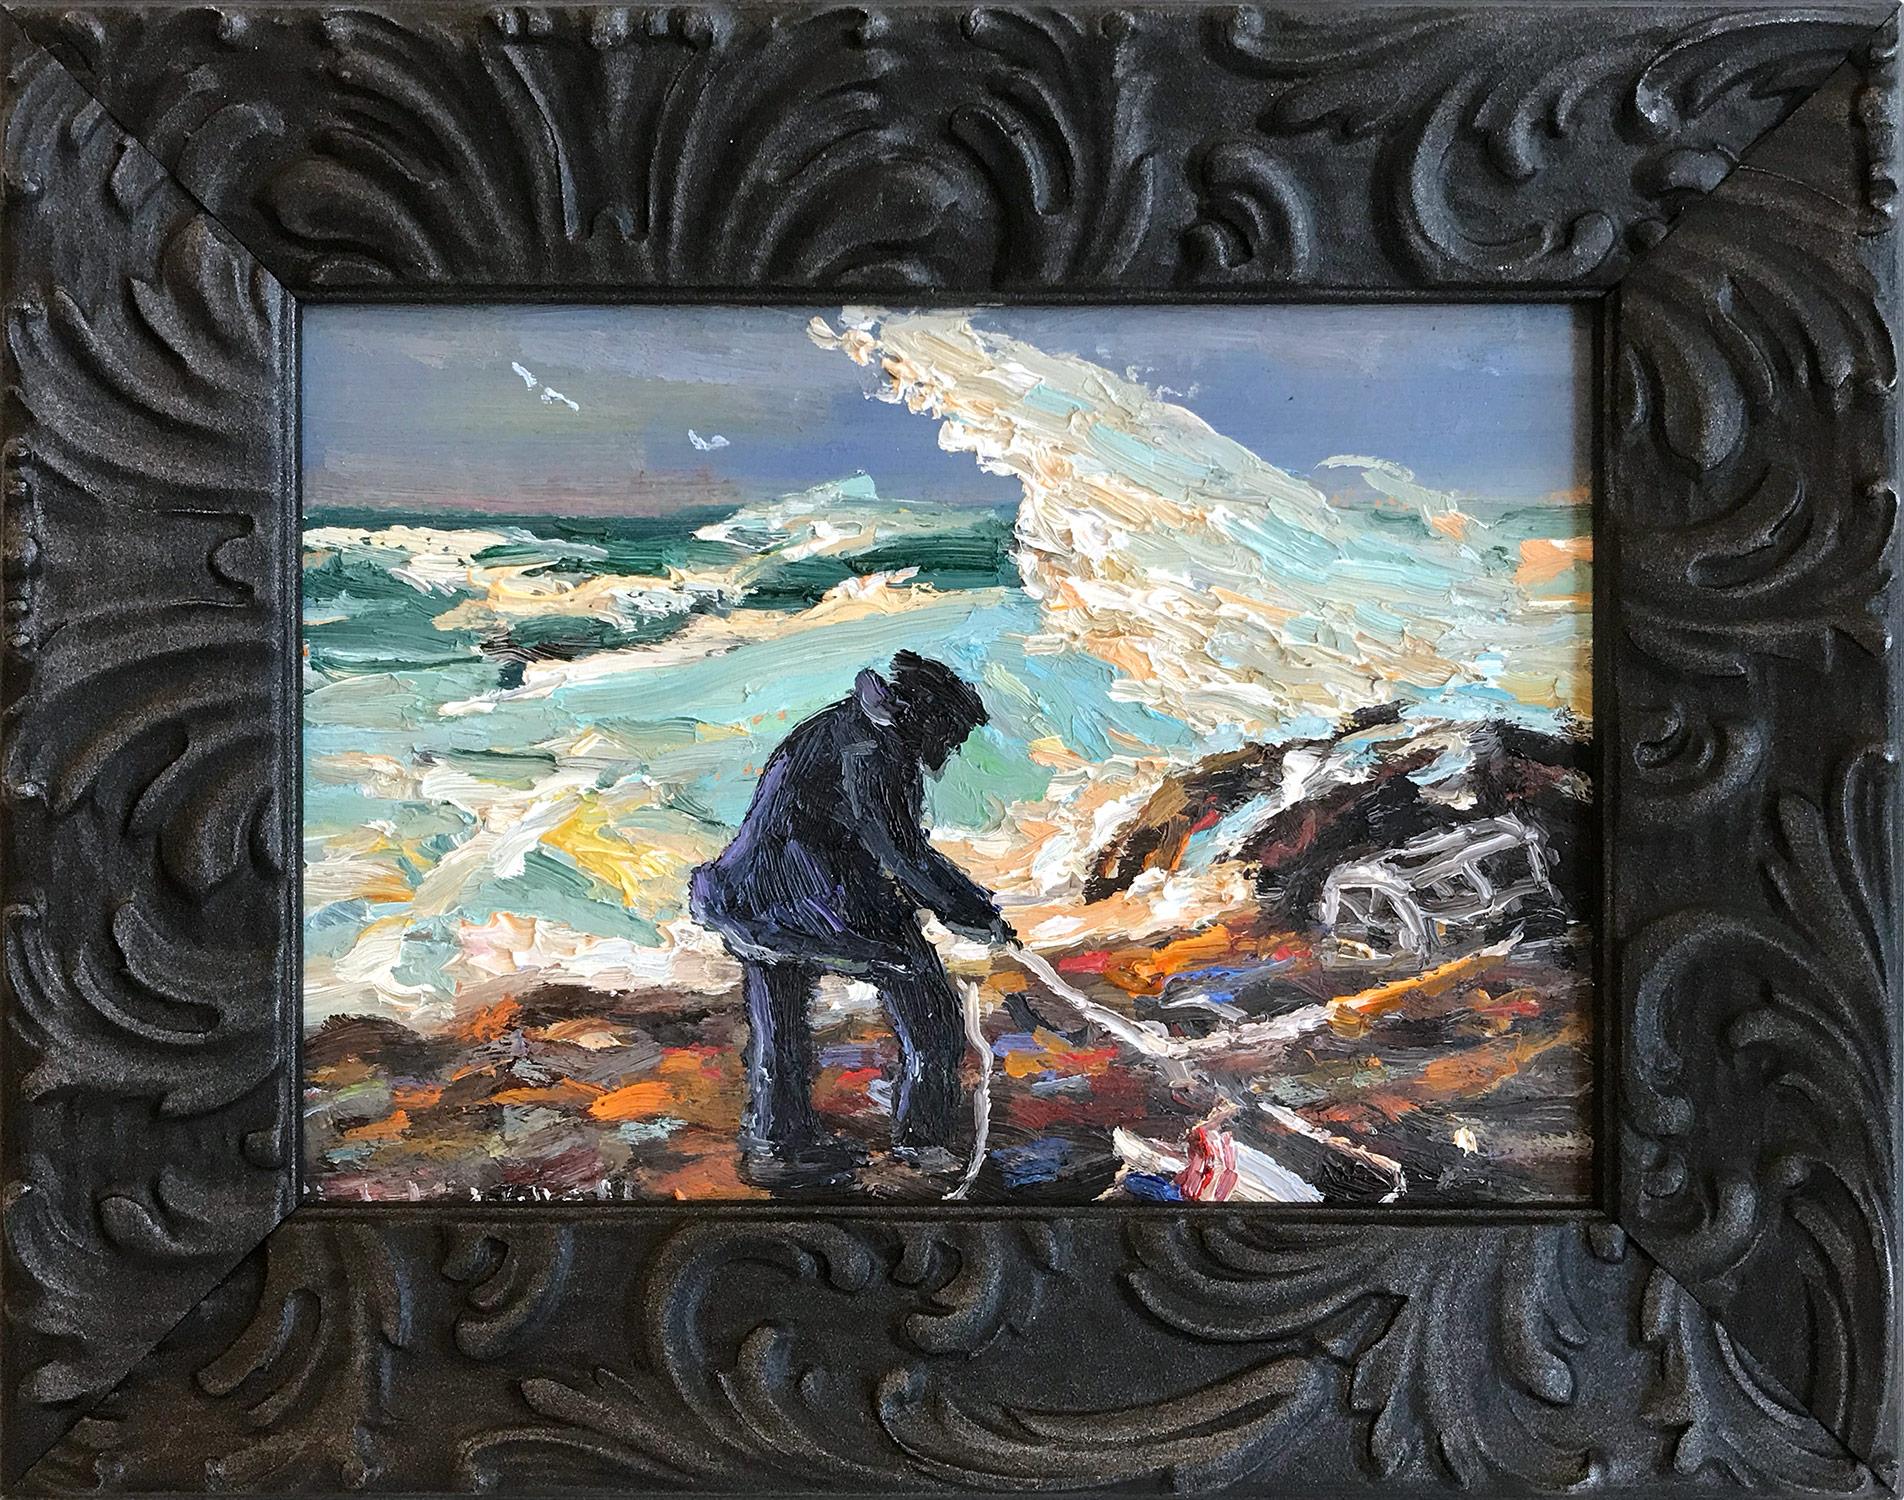 Christopher Willett Figurative Painting - "Lobster Pots" Gloucester Massachusetts Seashore Scene Oil Painting with Figure